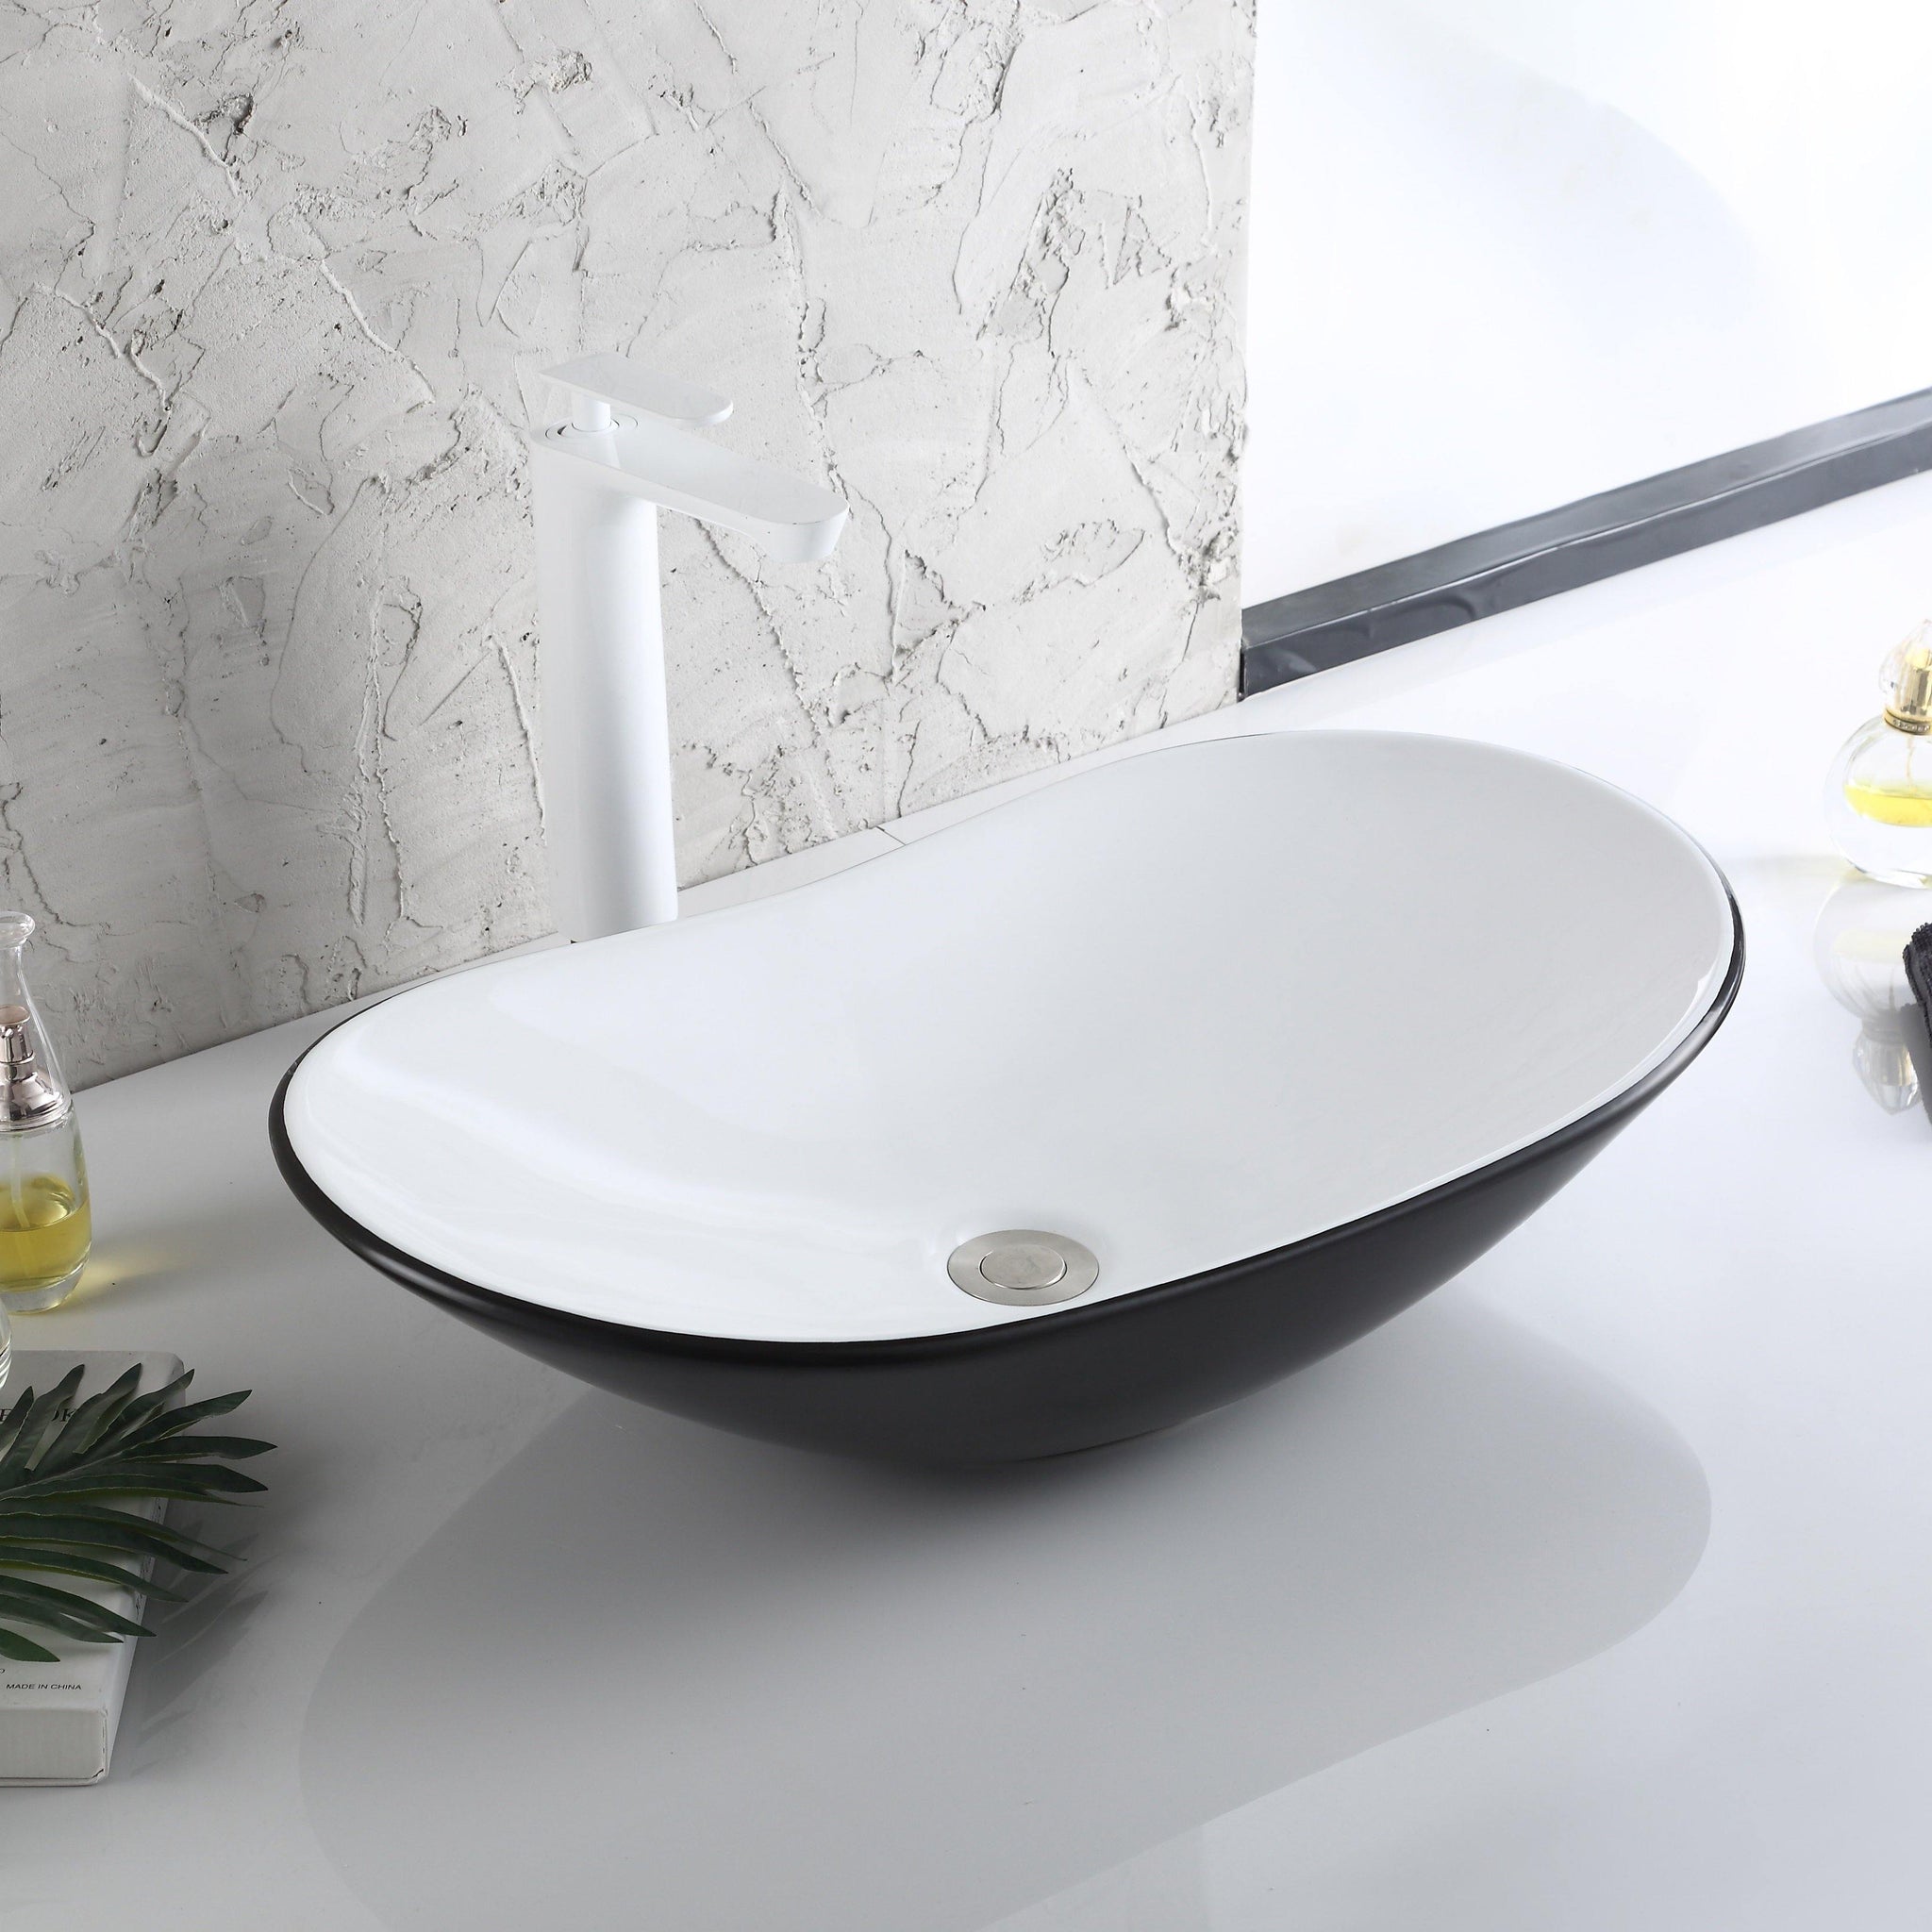 Ceramic Premium Desisgner Table Top Over Counter Vessel Sink Wash Basin for Bathroom 25 X 14 X 6 Inch Black White Basin For Bathroom - Bath Outlet